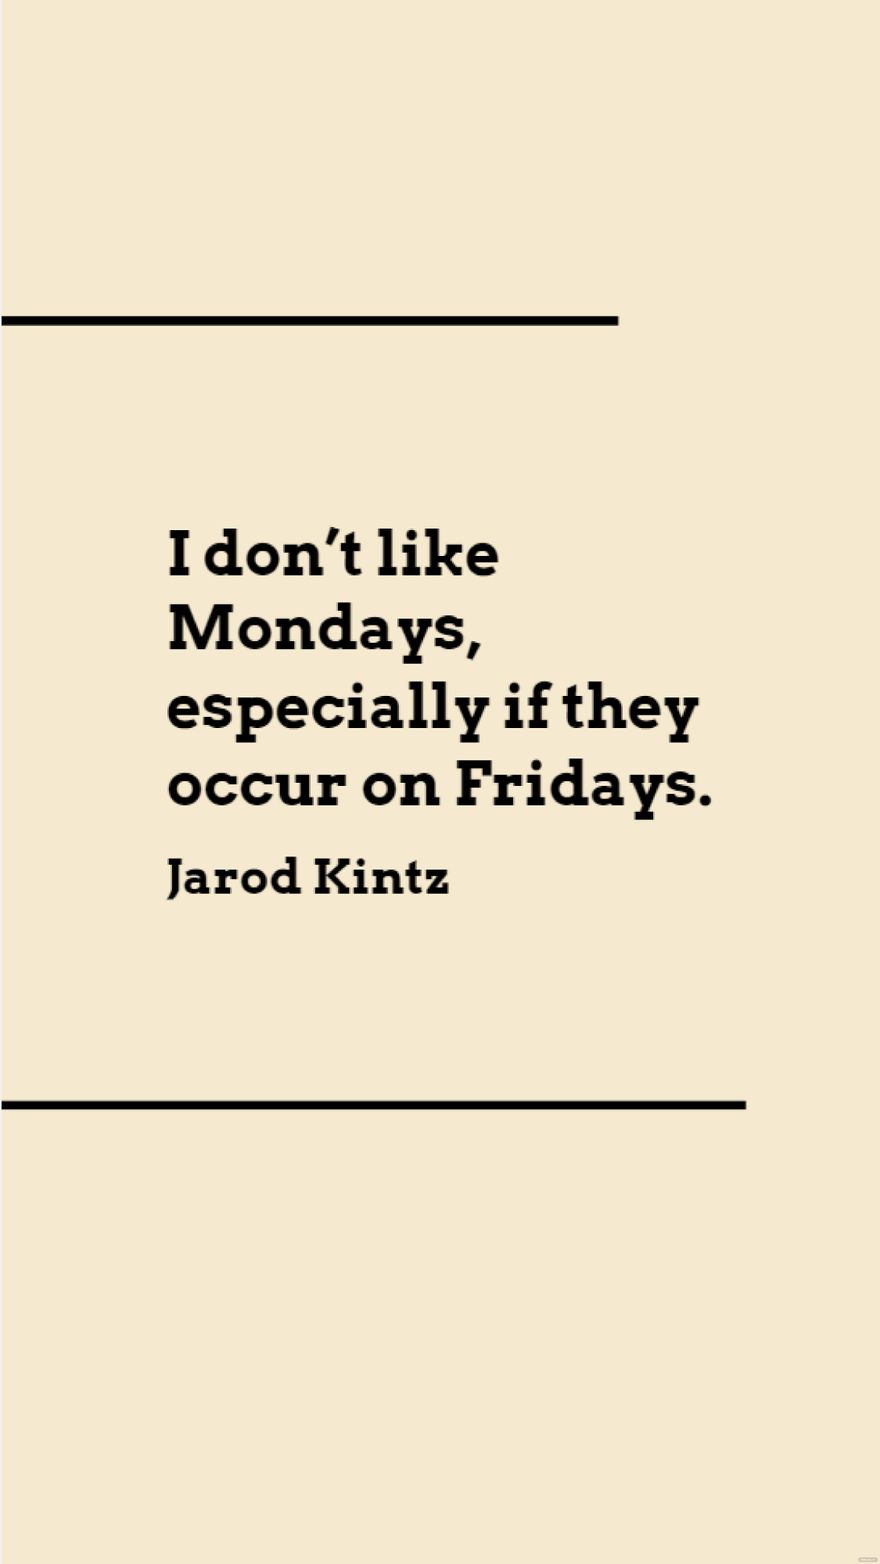 Jarod Kintz - I don’t like Mondays, especially if they occur on Fridays. in JPG